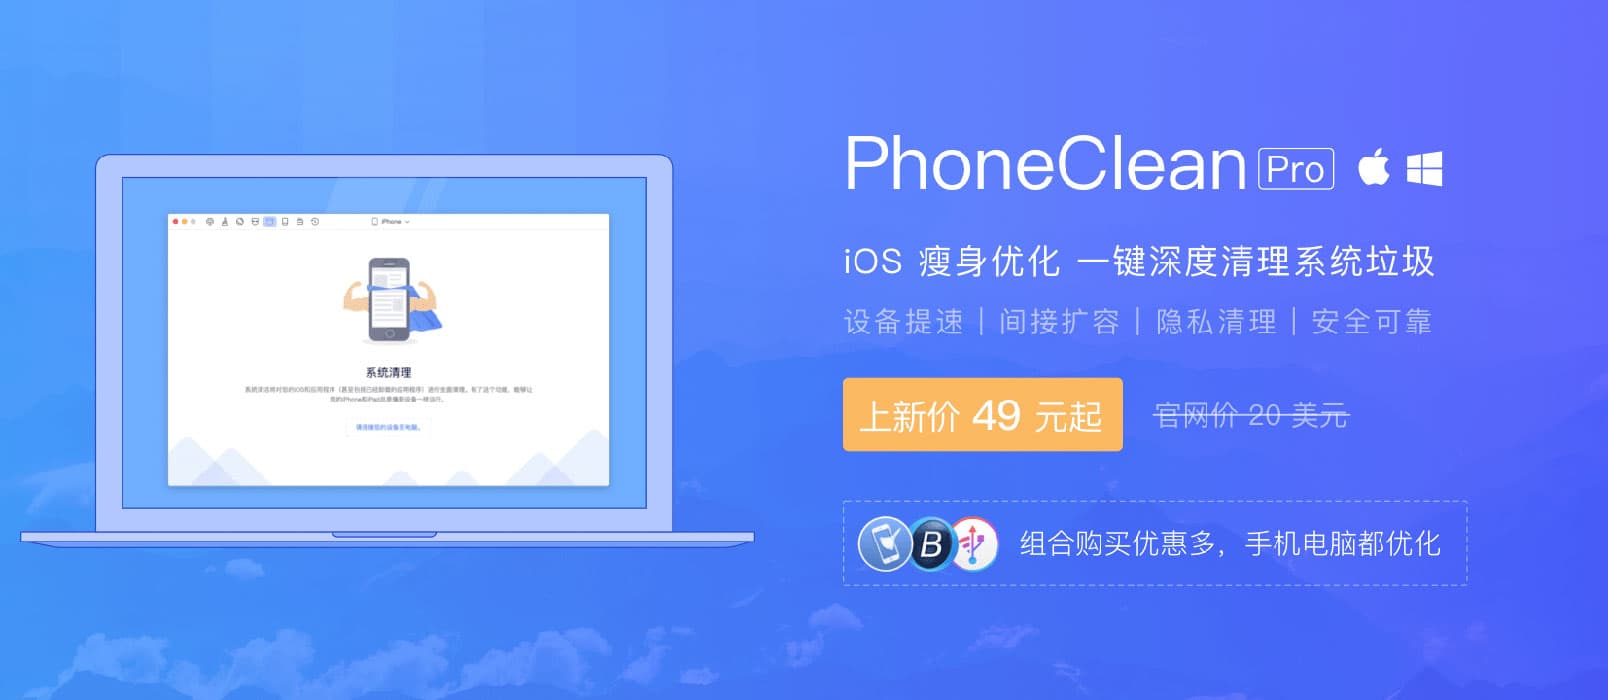 PhoneClean - iOS 瘦身优化神器，为 iPhone、iPad 提速扩容 1